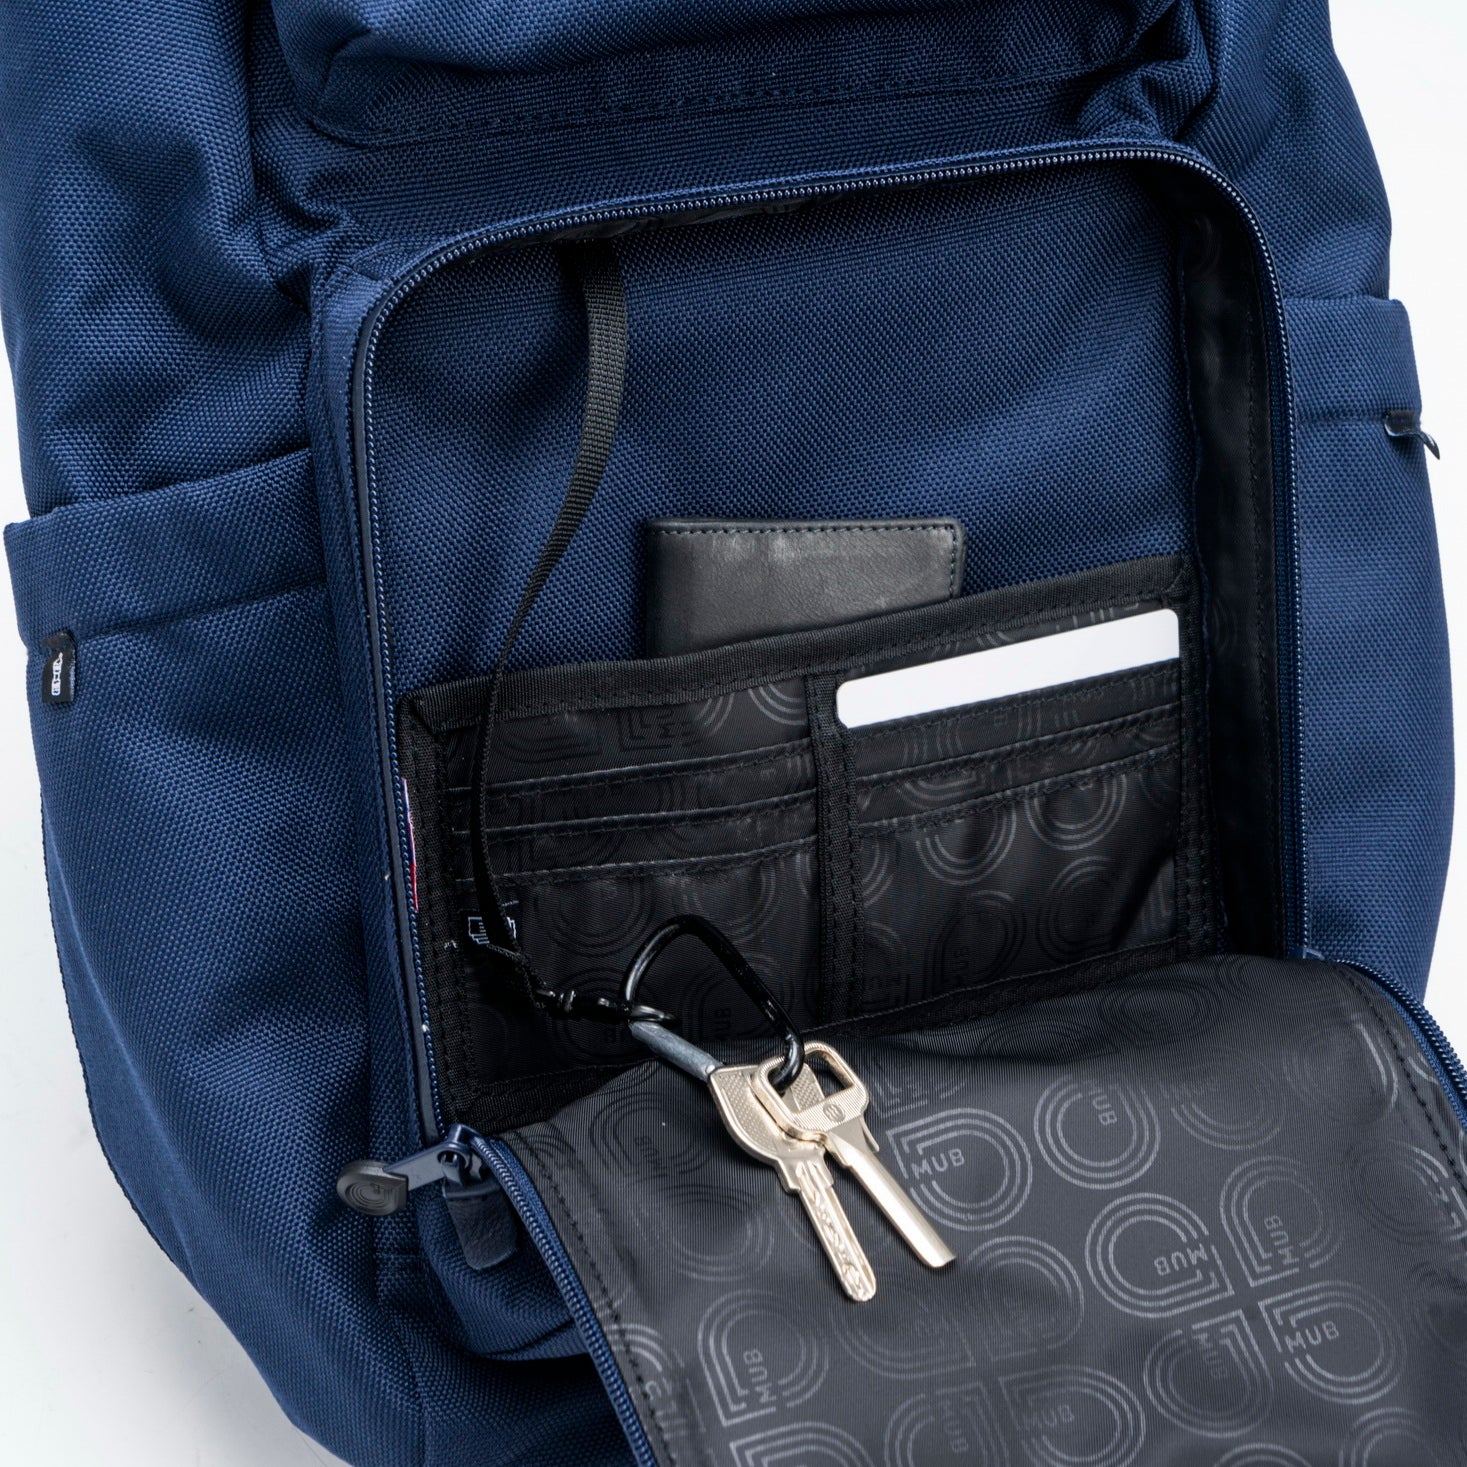 Bibi Mini Multi-functional Bag - Classic Blue